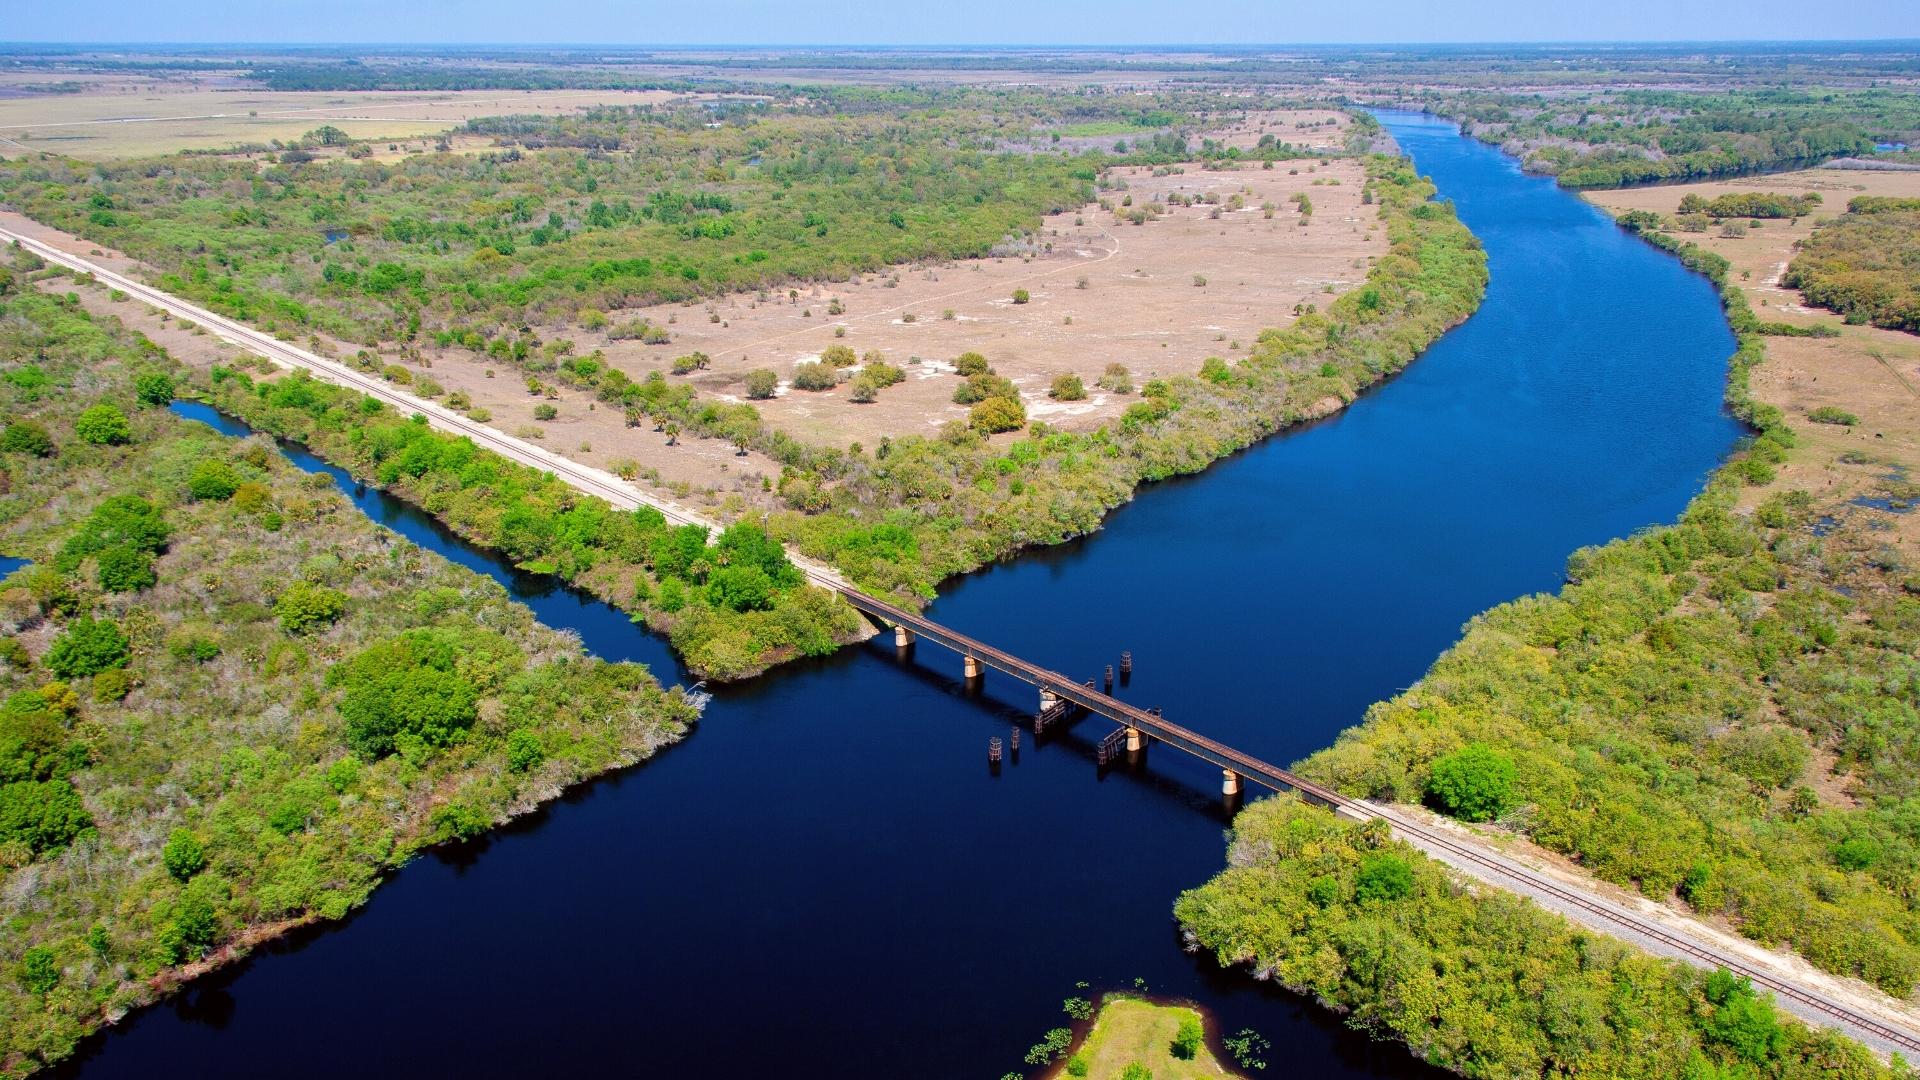 Kissimmee River near Orlando Florida